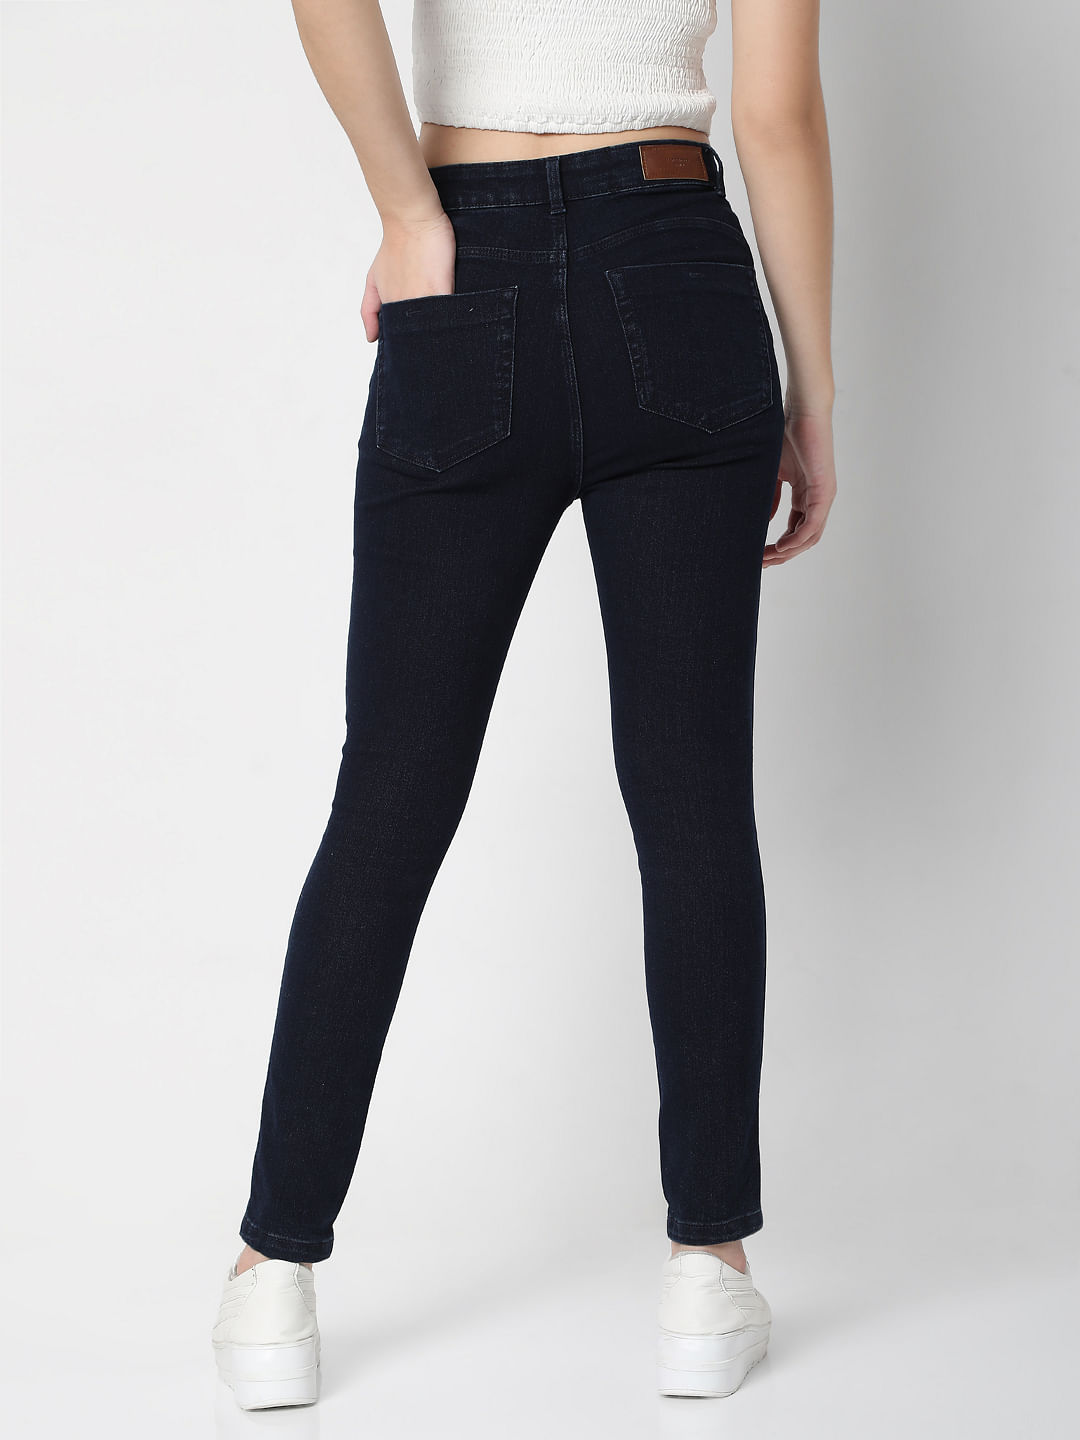 Tiffosi Denim - Light Push-up Jeans  https://www.tiffosi.com/pt/mulher/colec-o/jeans/push-up.html  #ourfityourattitude⁠ .⁠ .⁠ .⁠ #tiffosi #tiffosidenim #wearedenim #denim # jeans #fitguide #jeansfitguide #denimfitguide #denimlovers #jeanslovers ...